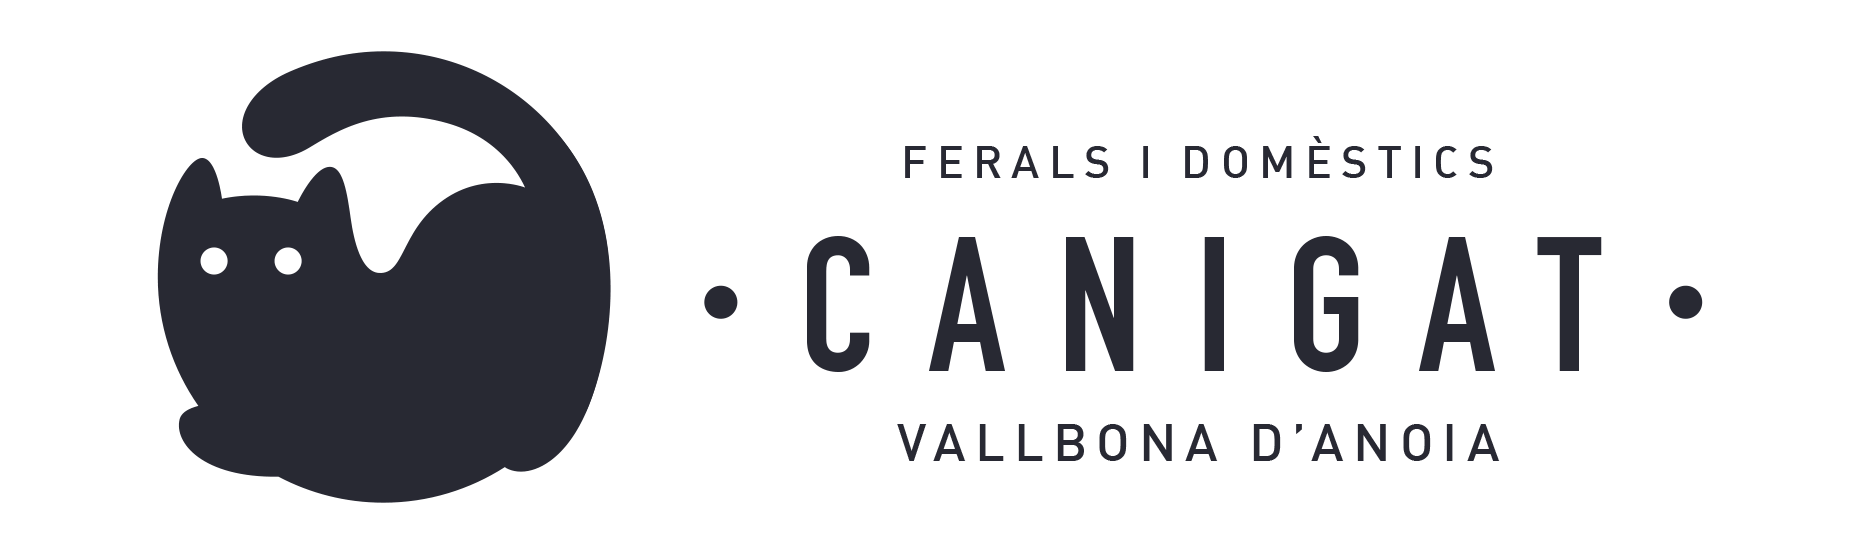 Canigat Vallbona d'Anoia logo